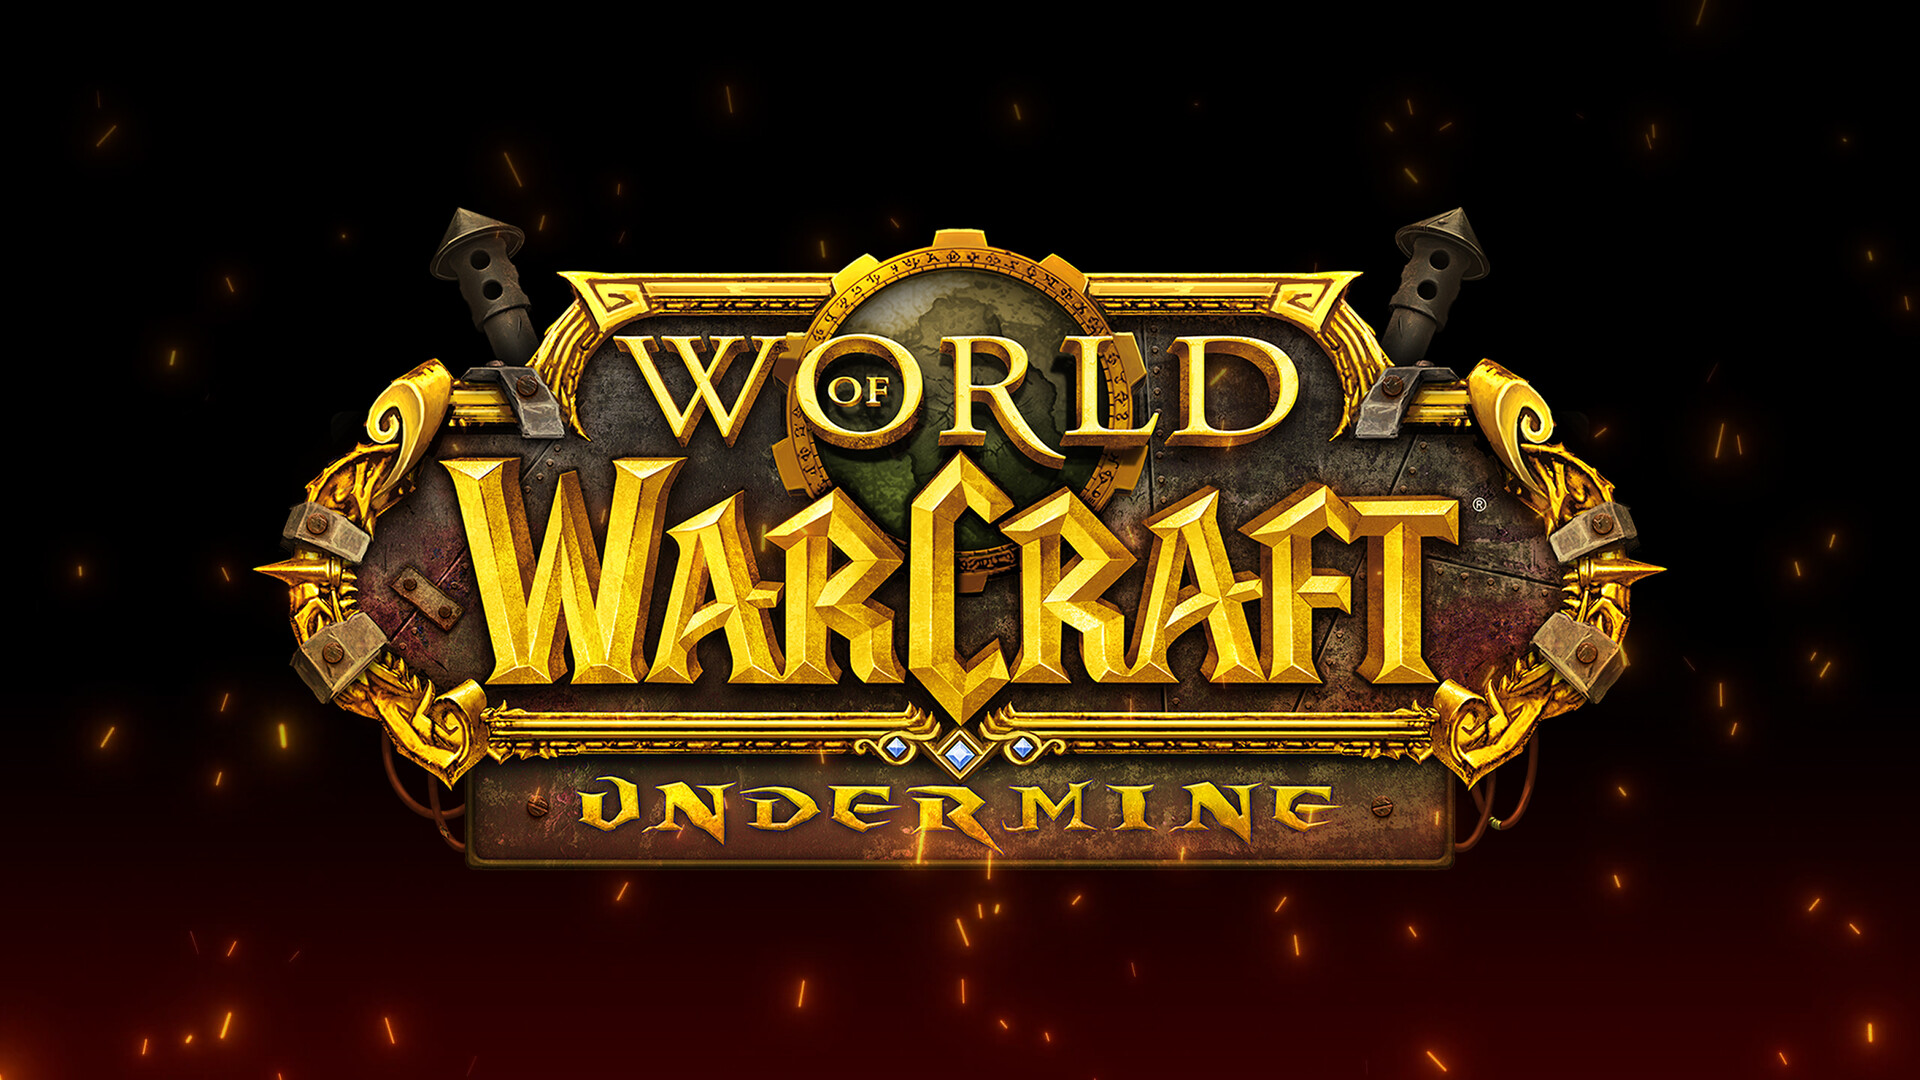 Video Game World of Warcraft: Undermine HD Wallpaper | Background Image